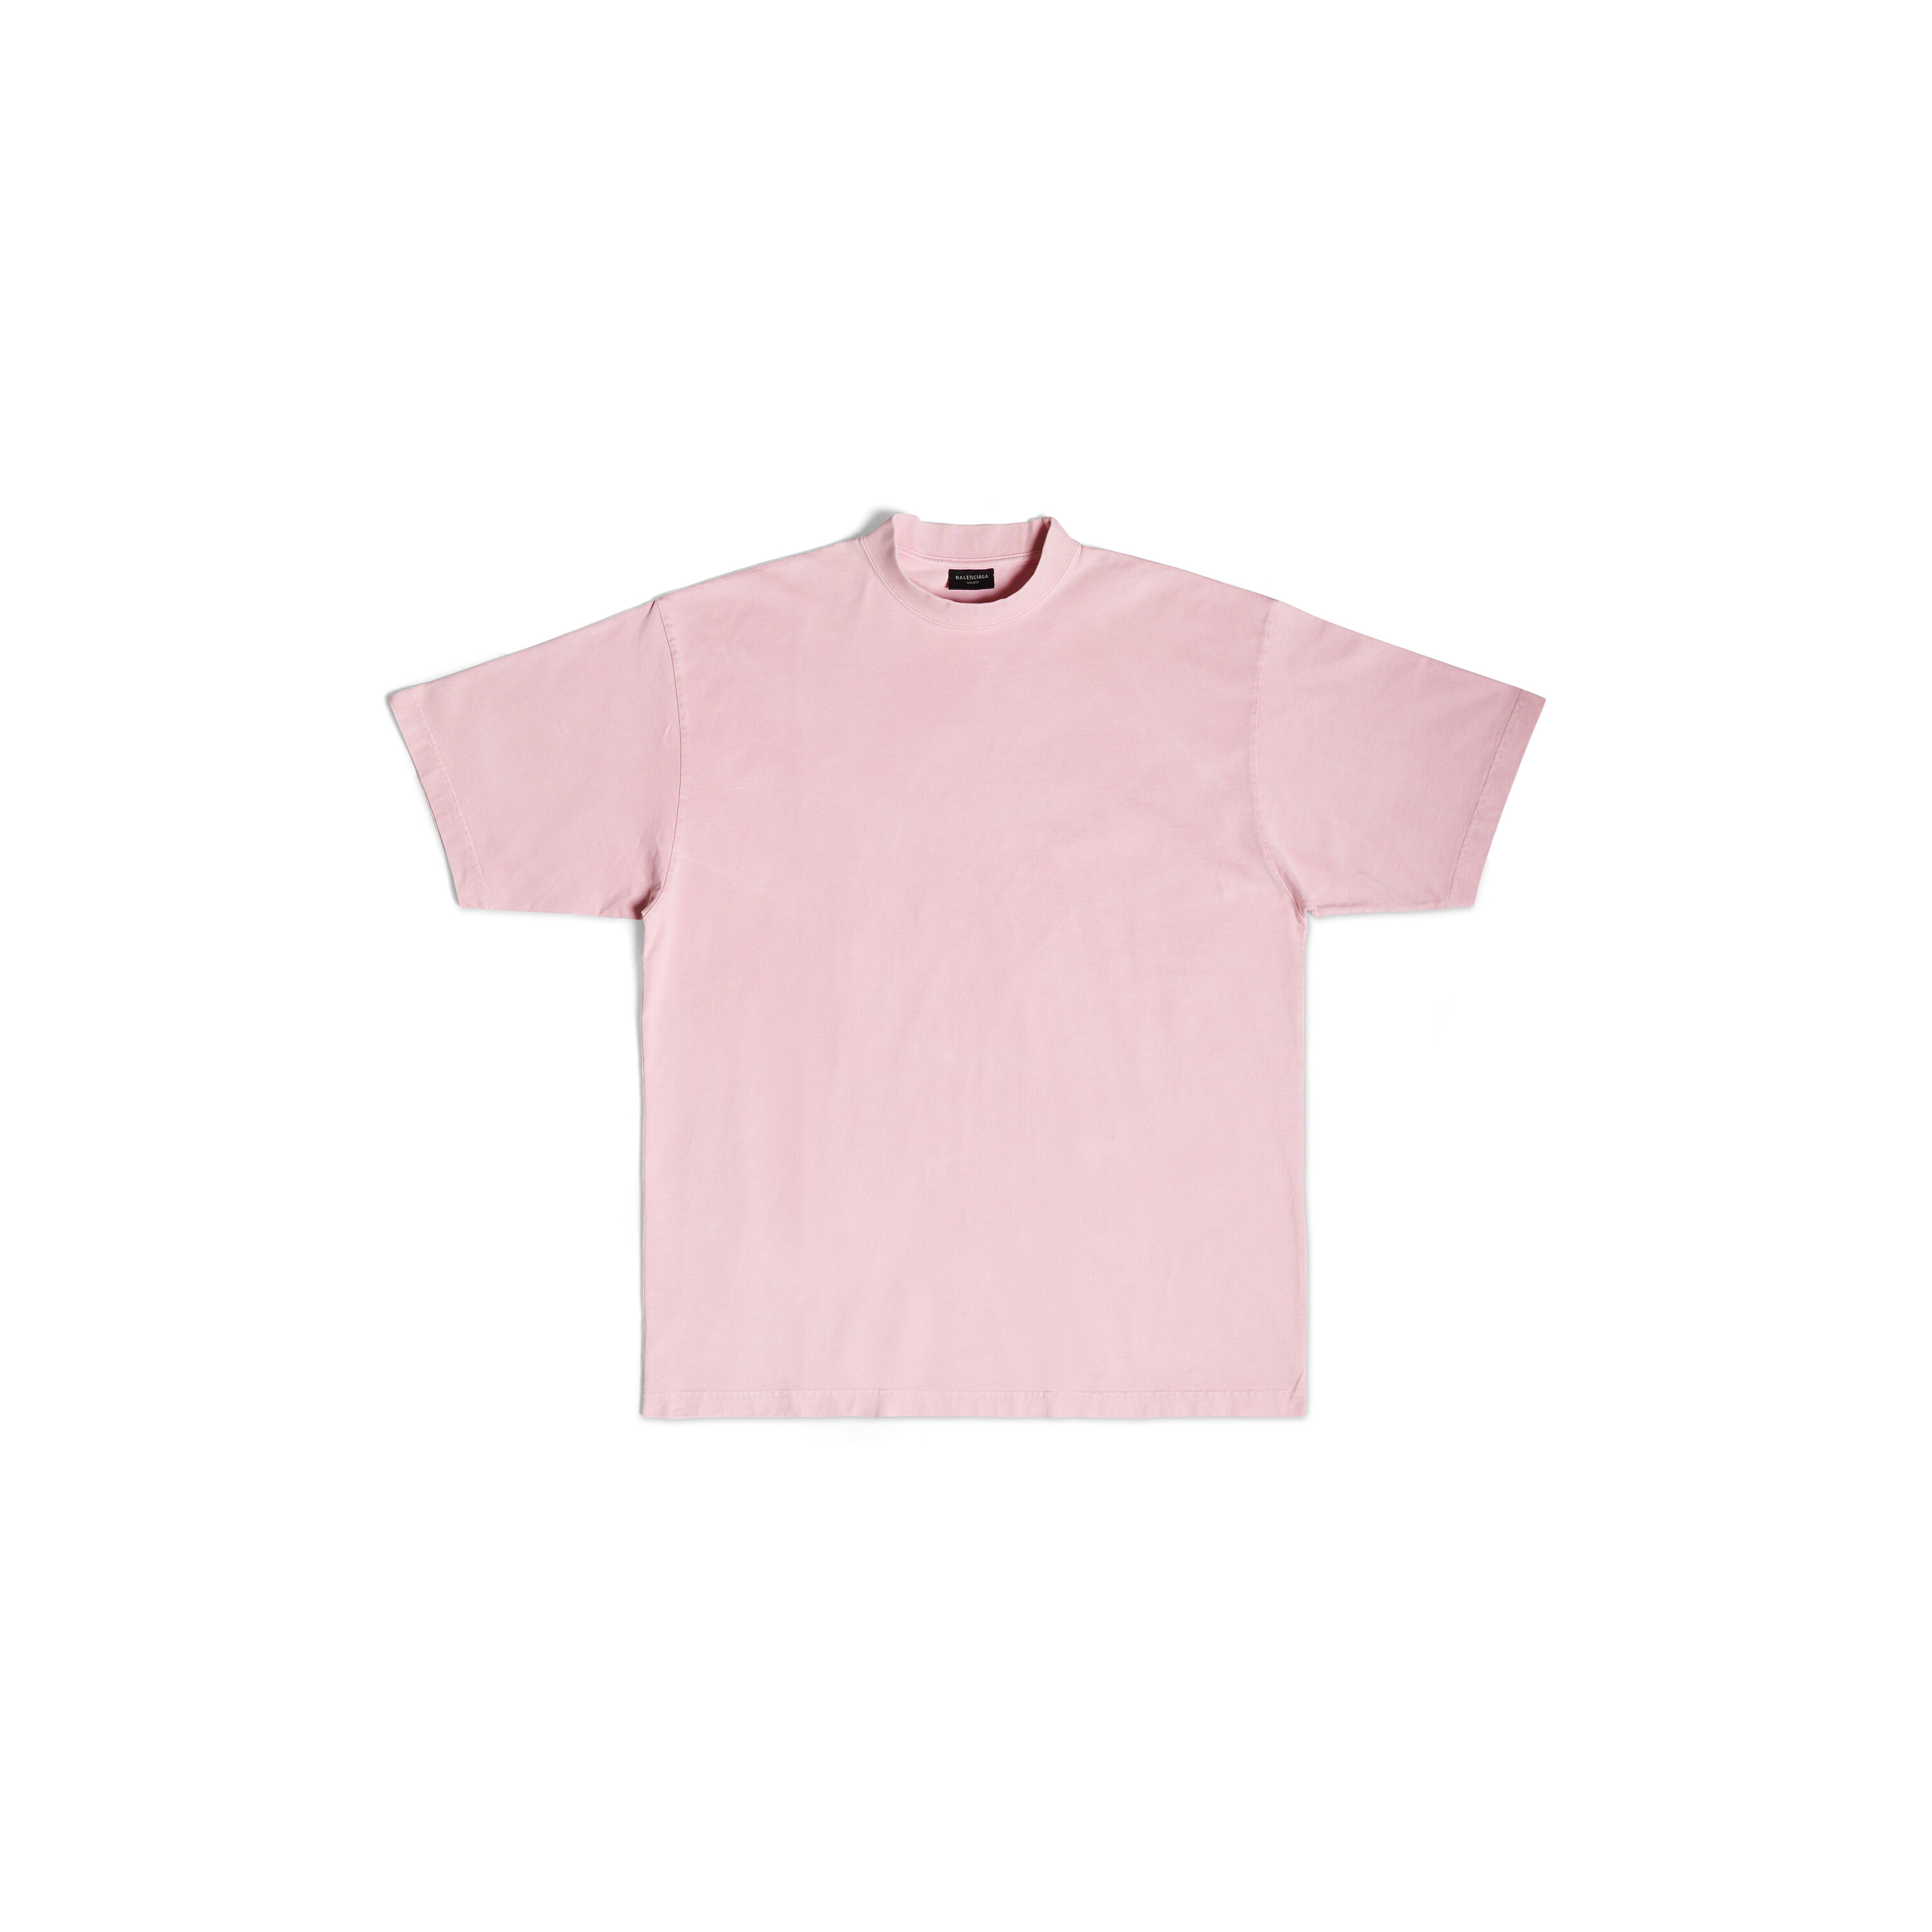 Pink Campaign TShirt by Balenciaga on Sale